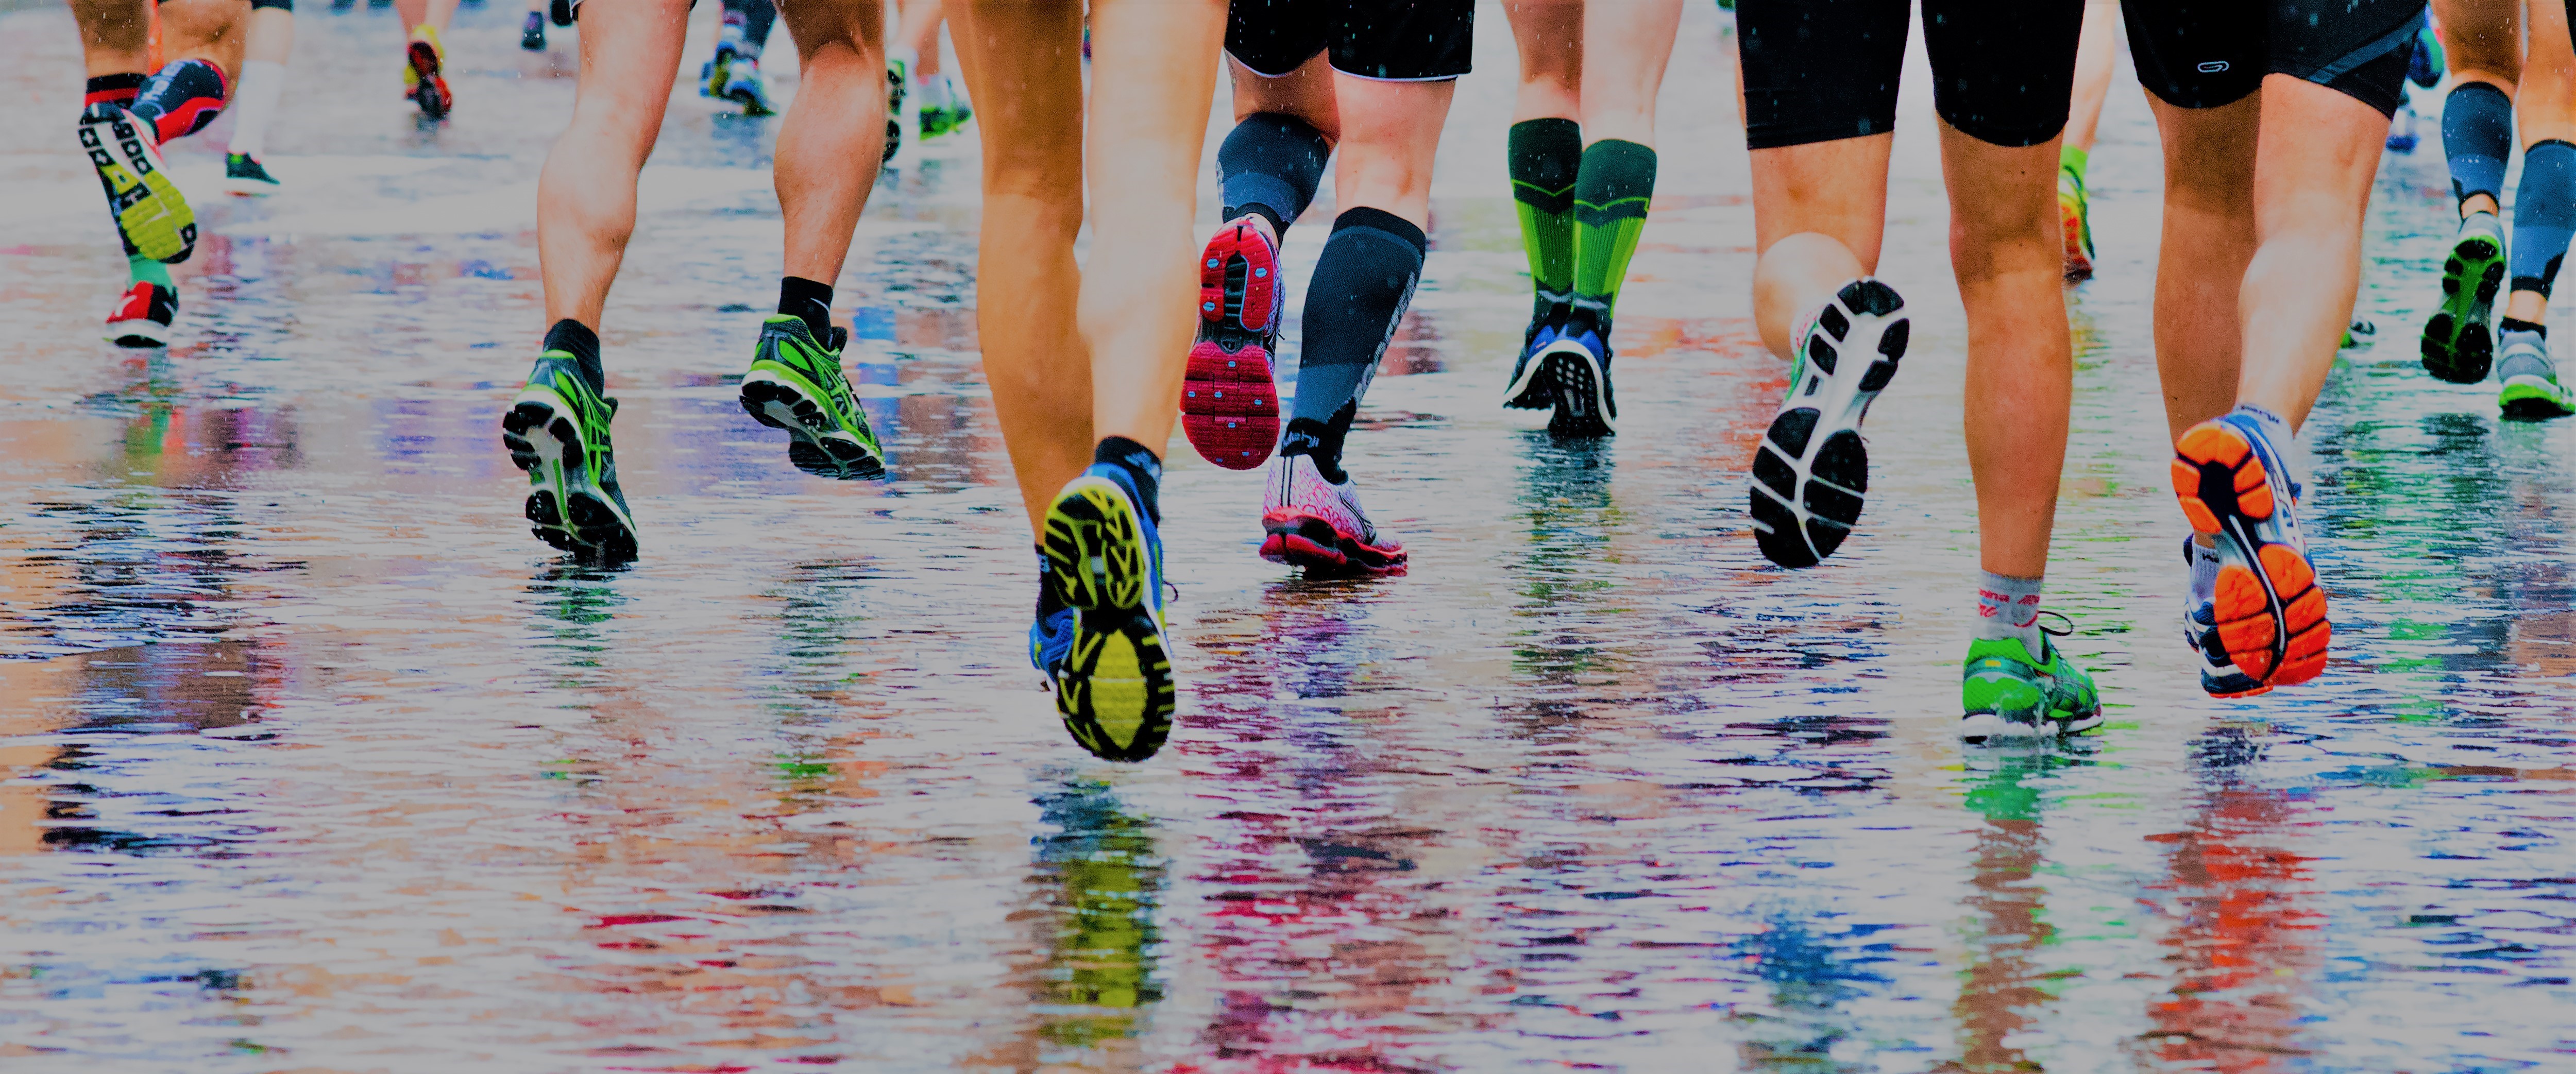 Runners in the rain